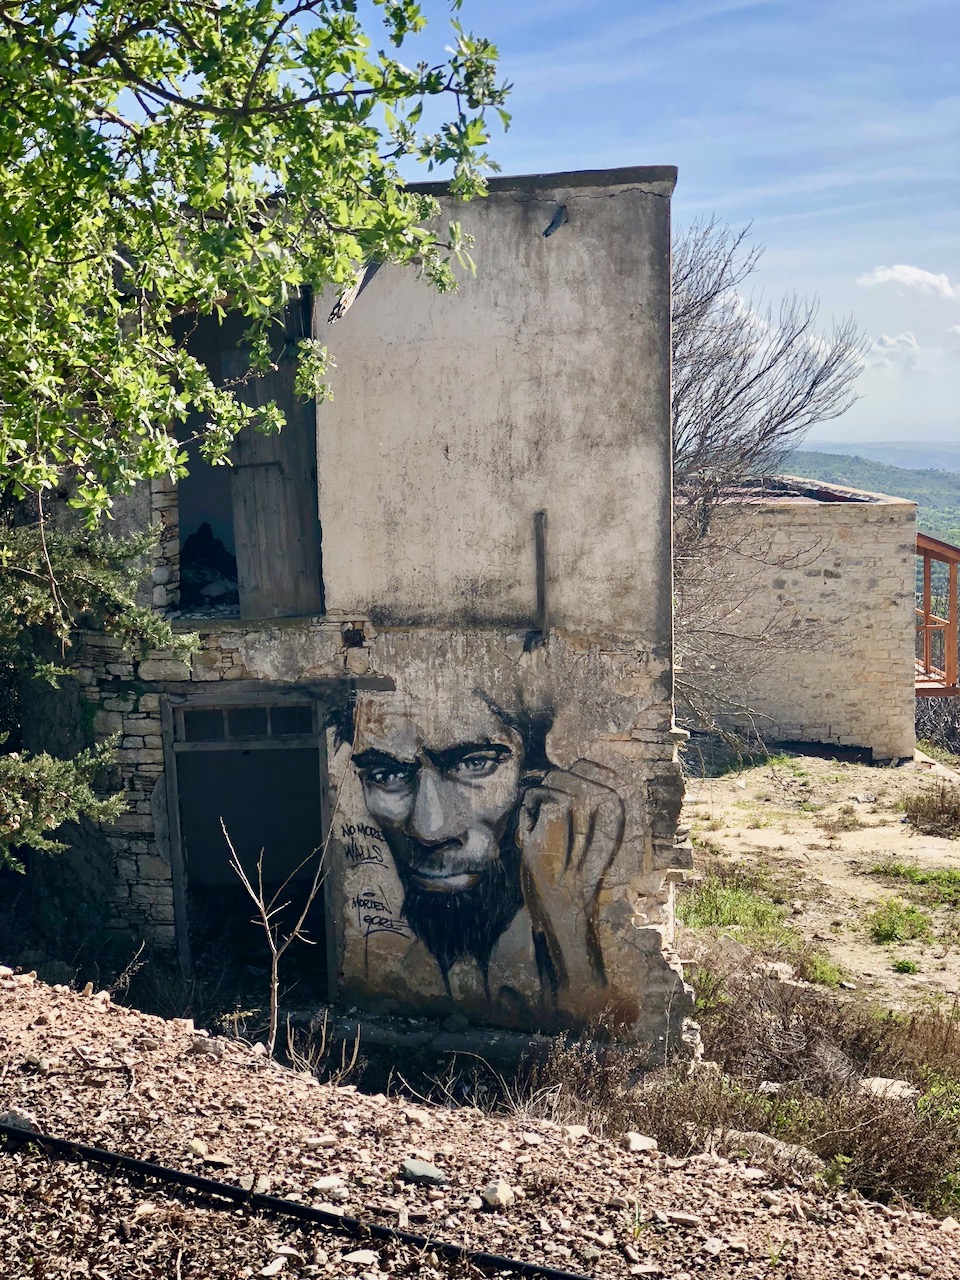 Paphos Street Art